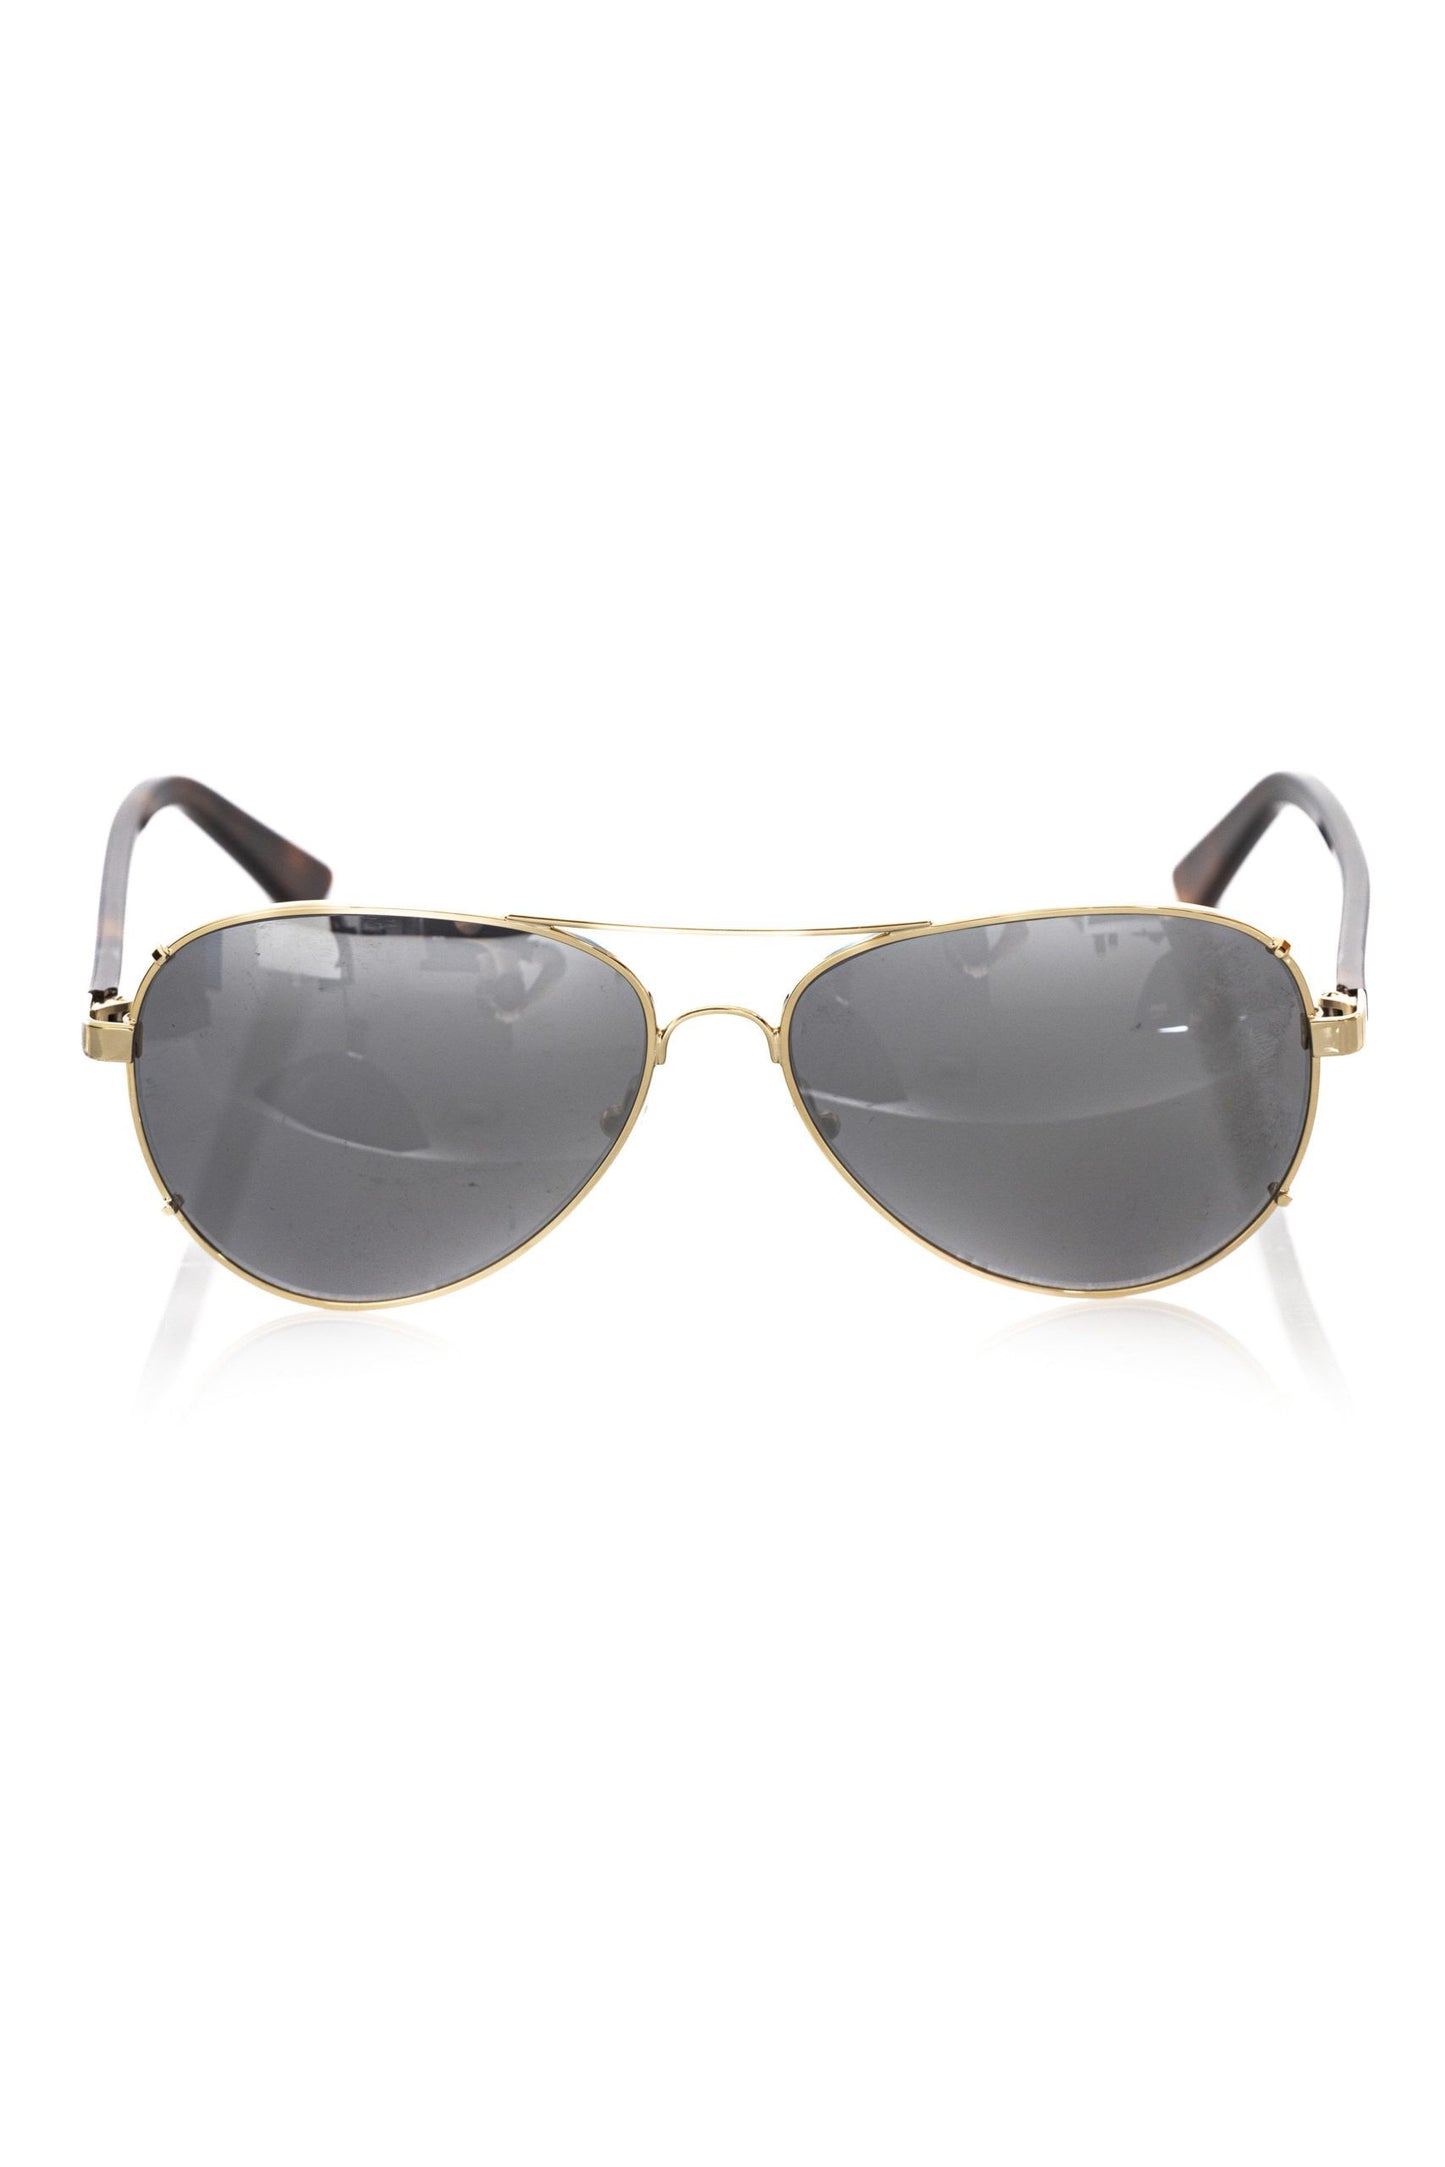 Frankie Morello FRMO-22122 Gold Metallic Fibre Sunglasses